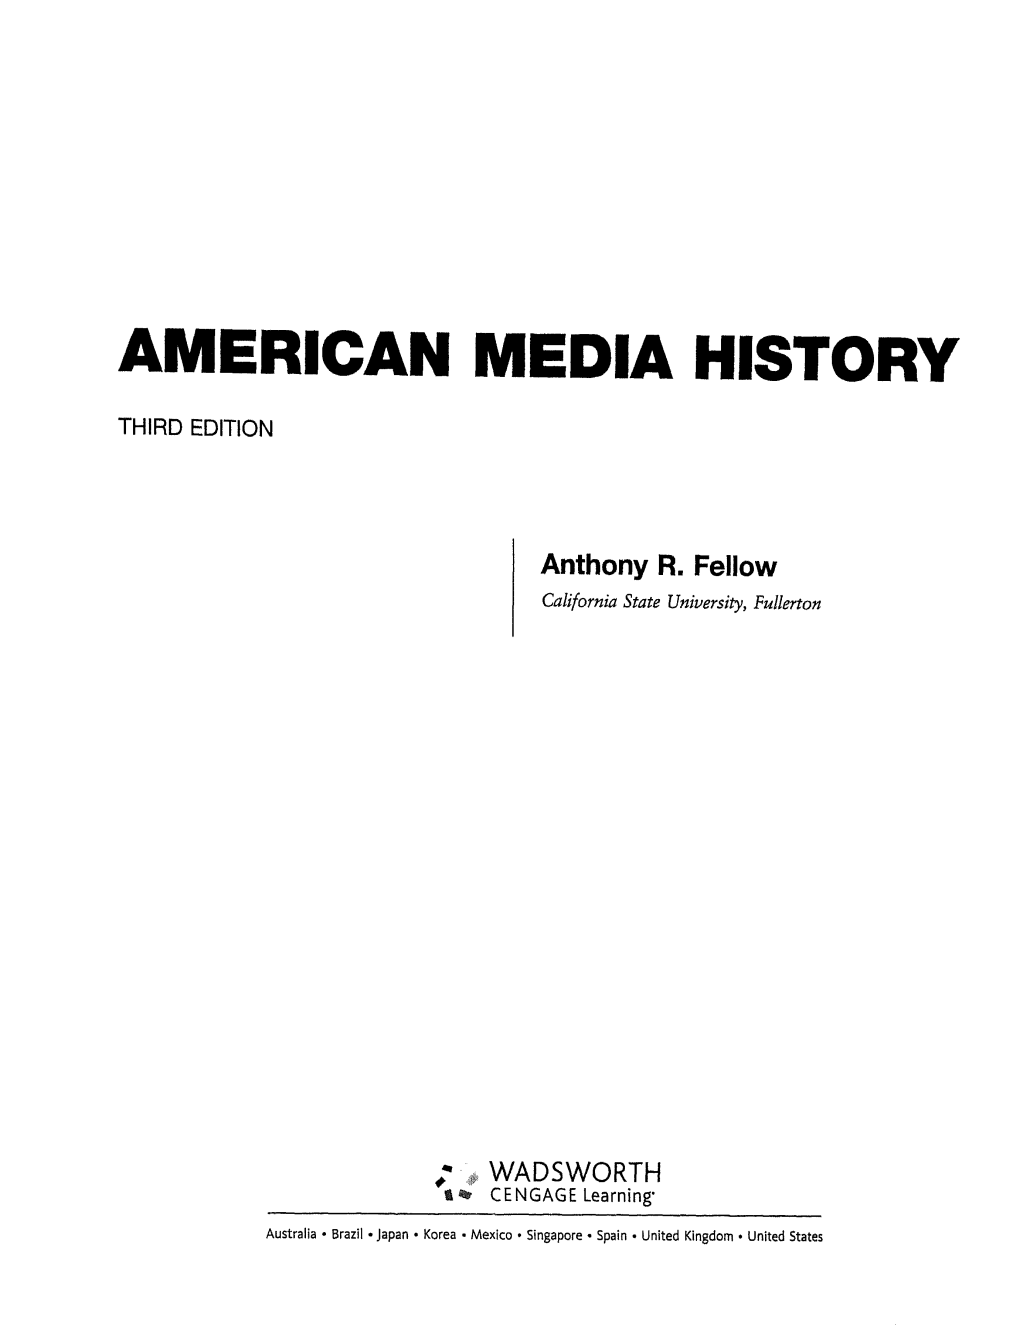 American Media History